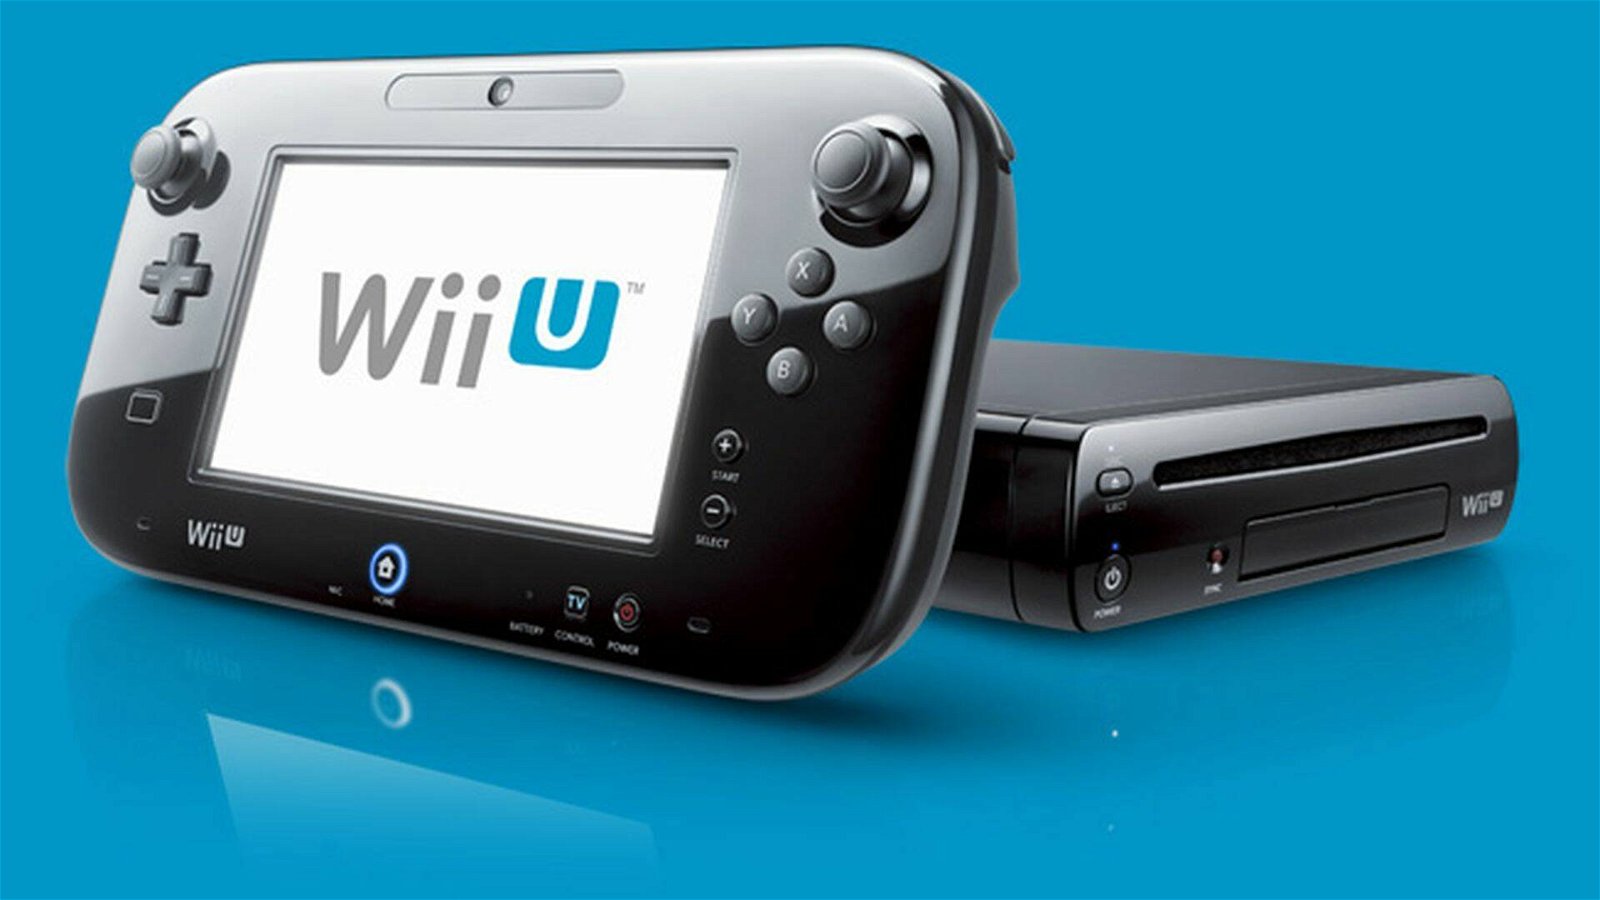 Immagine di Ci crediate o no è stata annunciata una nuova esclusiva per Wii U